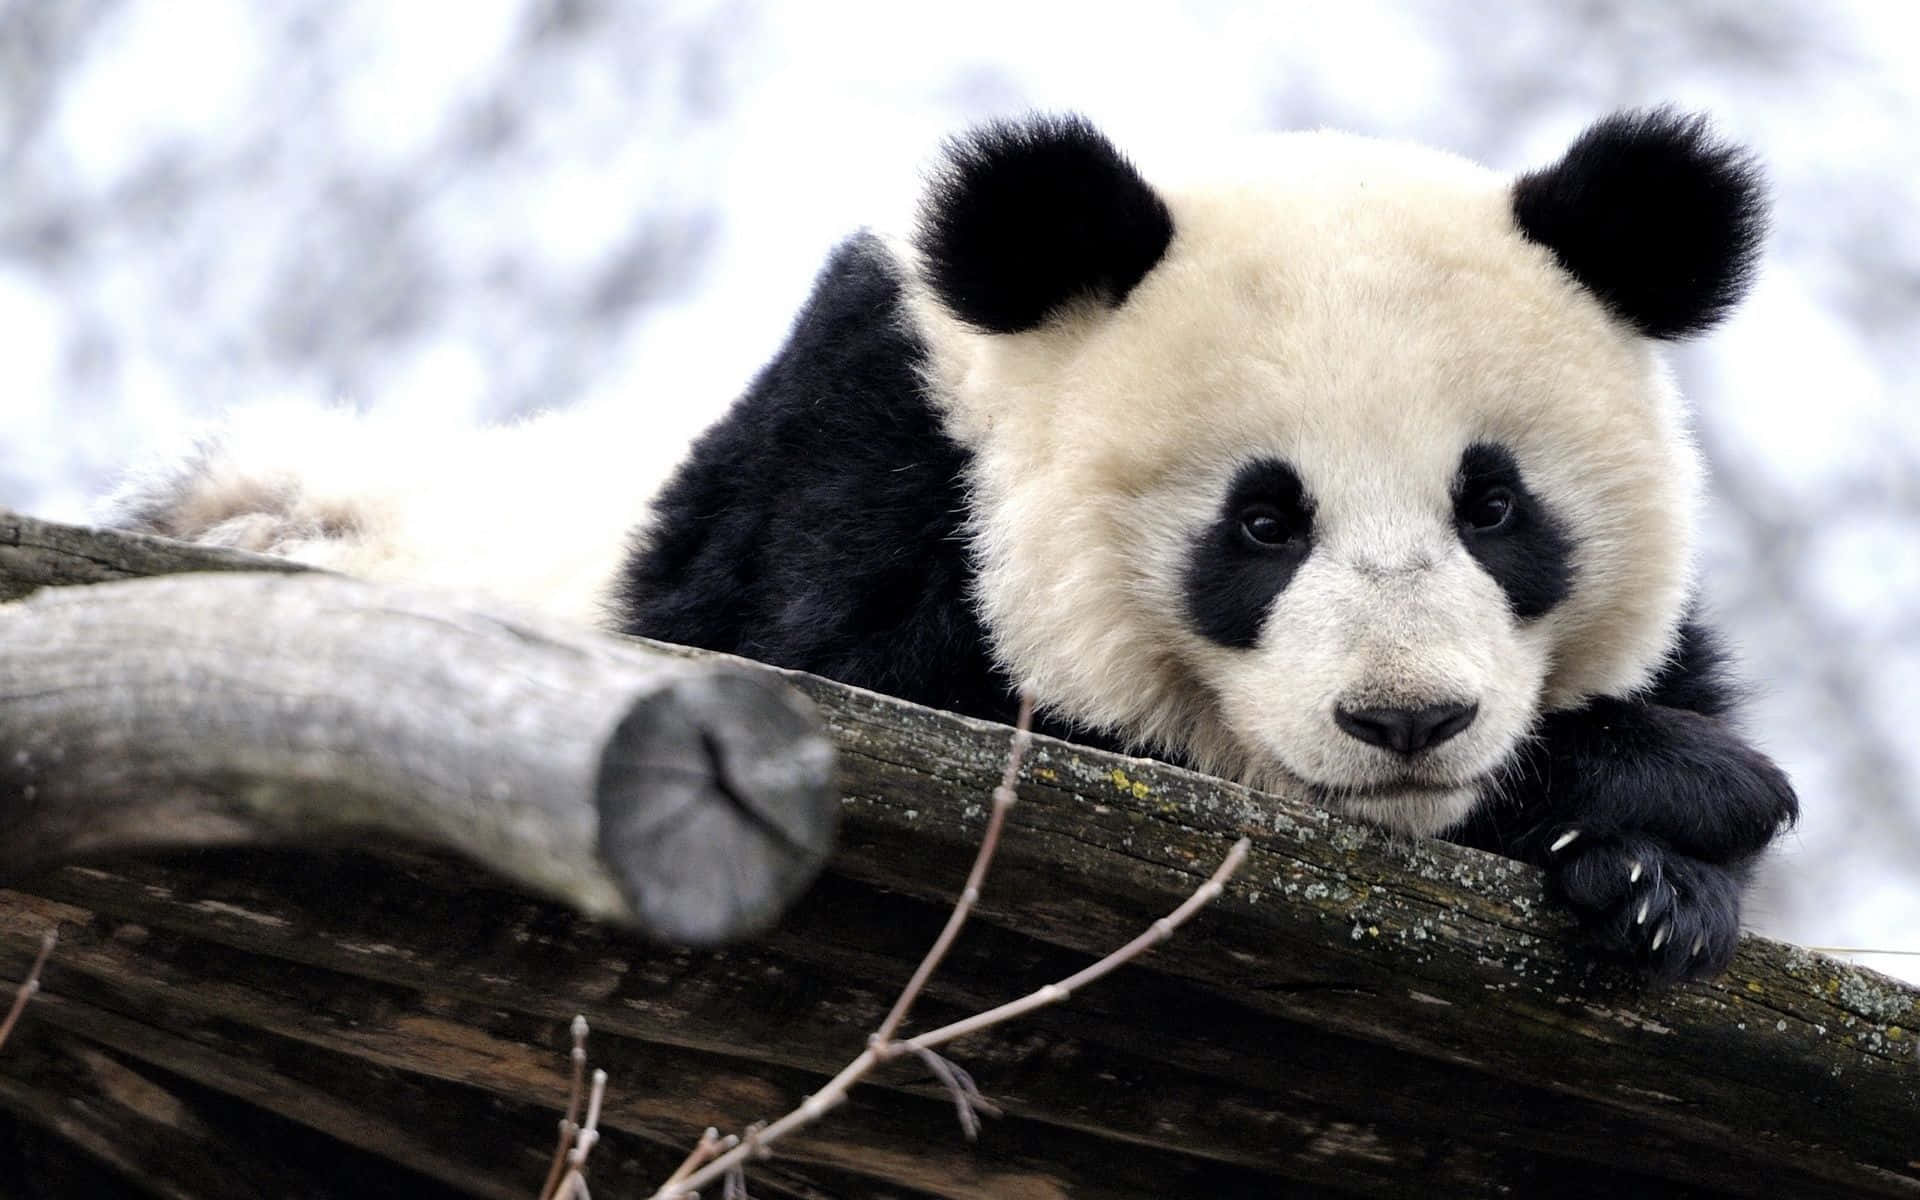 A Group Of Bamboo-loving Giant Pandas Enjoying The Shade